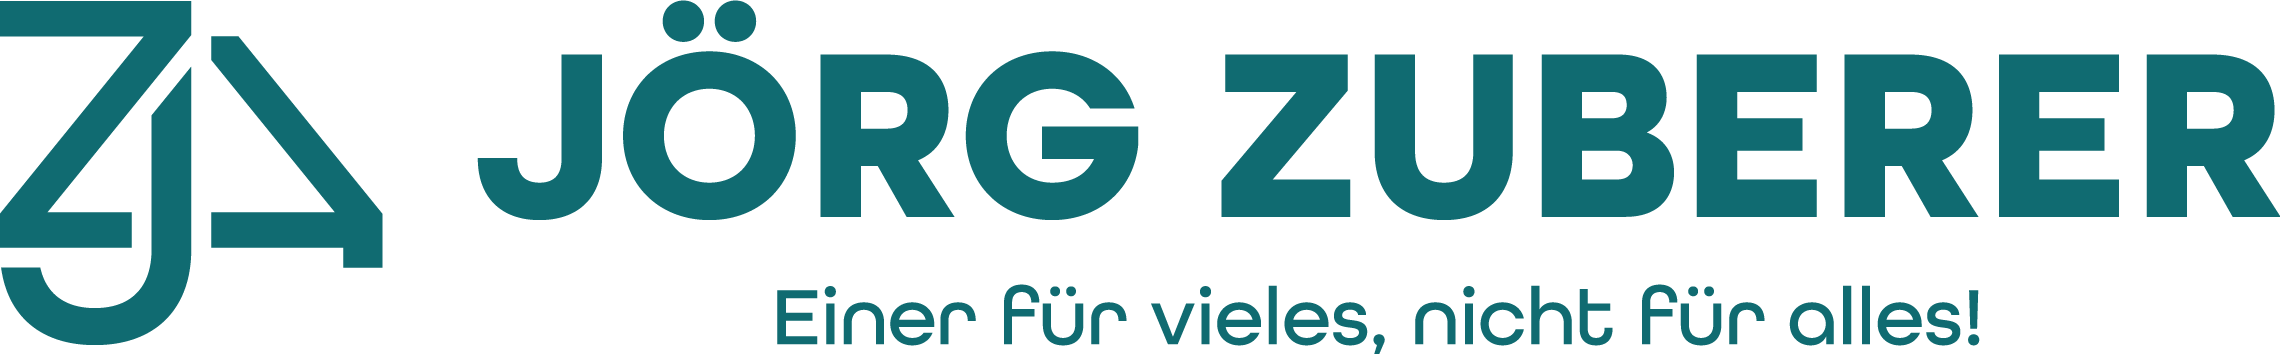 joergzuberer_logo_2